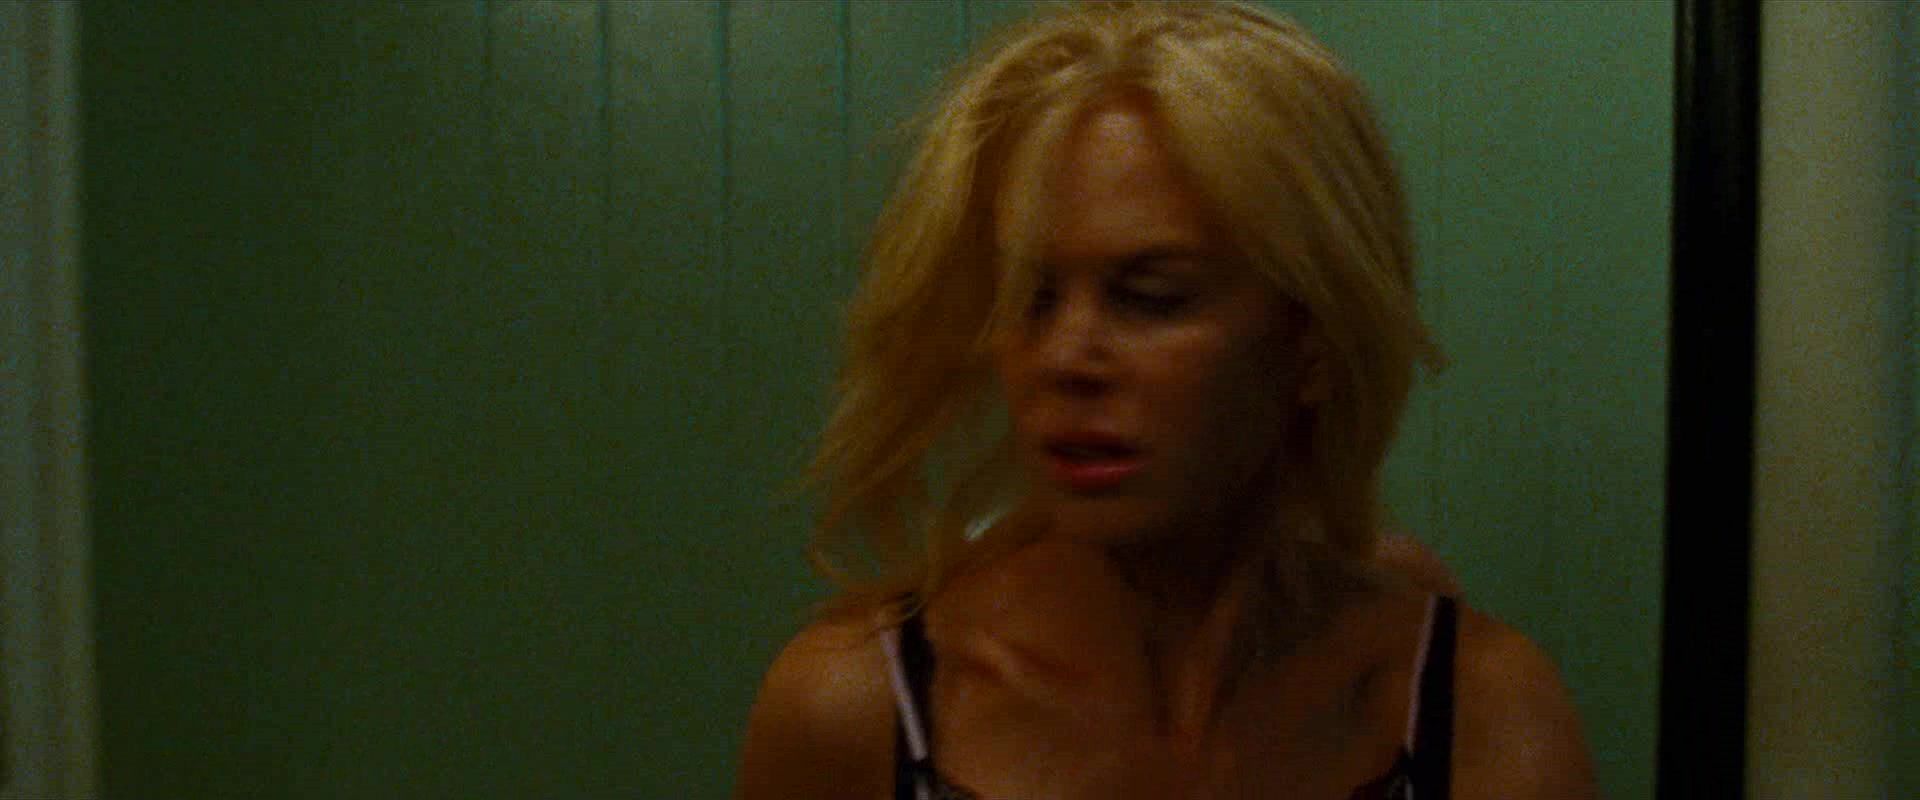 Amateur Nicole Kidman nude pussy - The Paperboy (2012) Canadian - 1